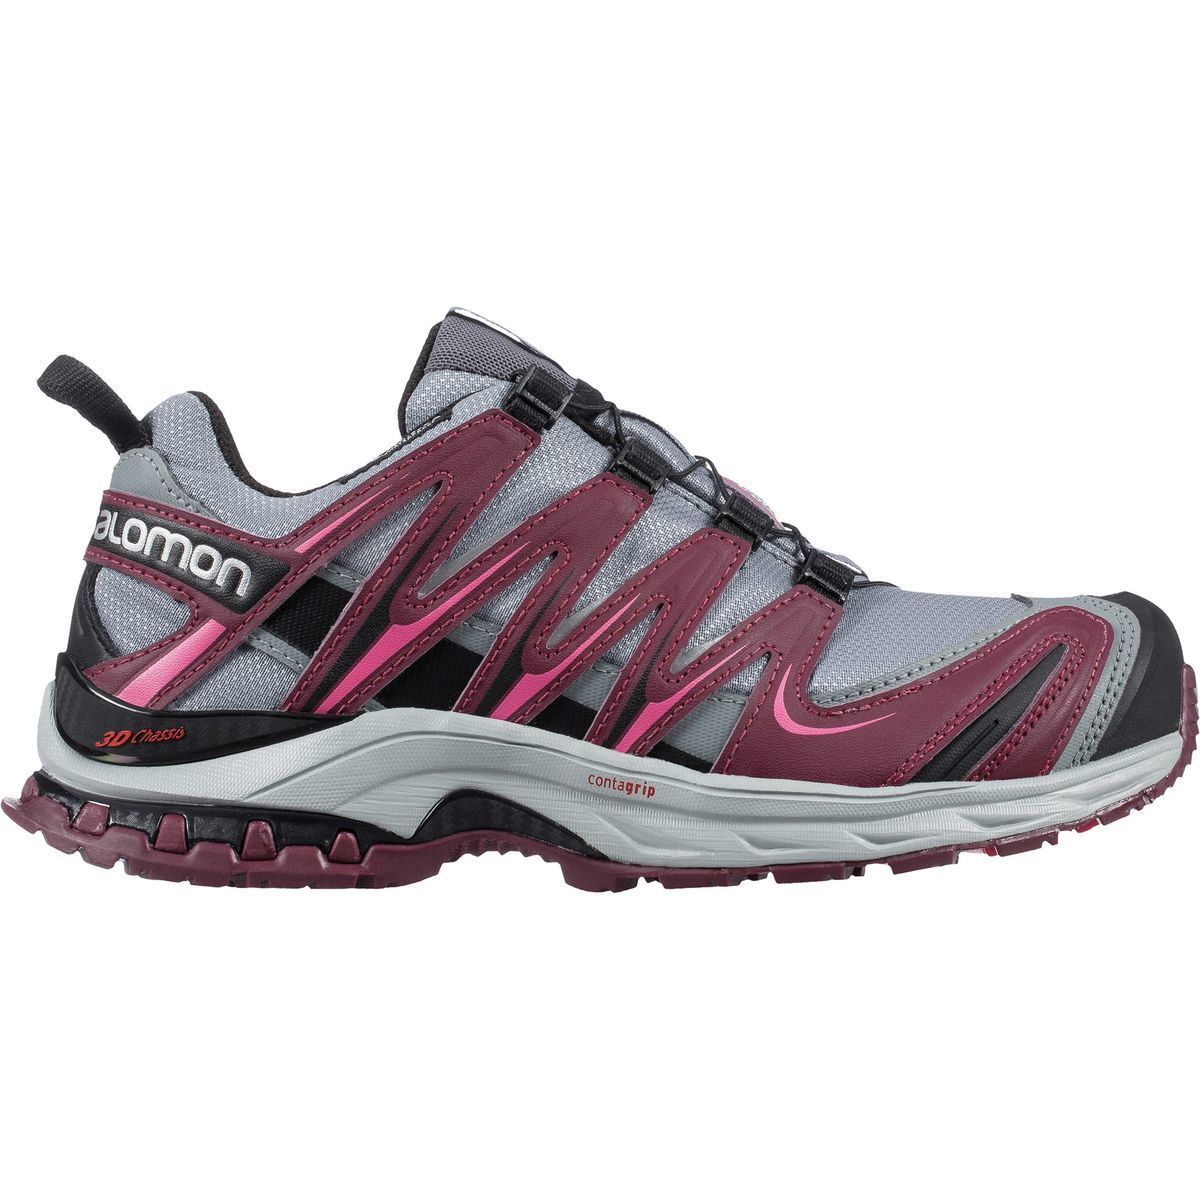 Salomon XA Pro 3D CS WP Trail Running Shoe Women's